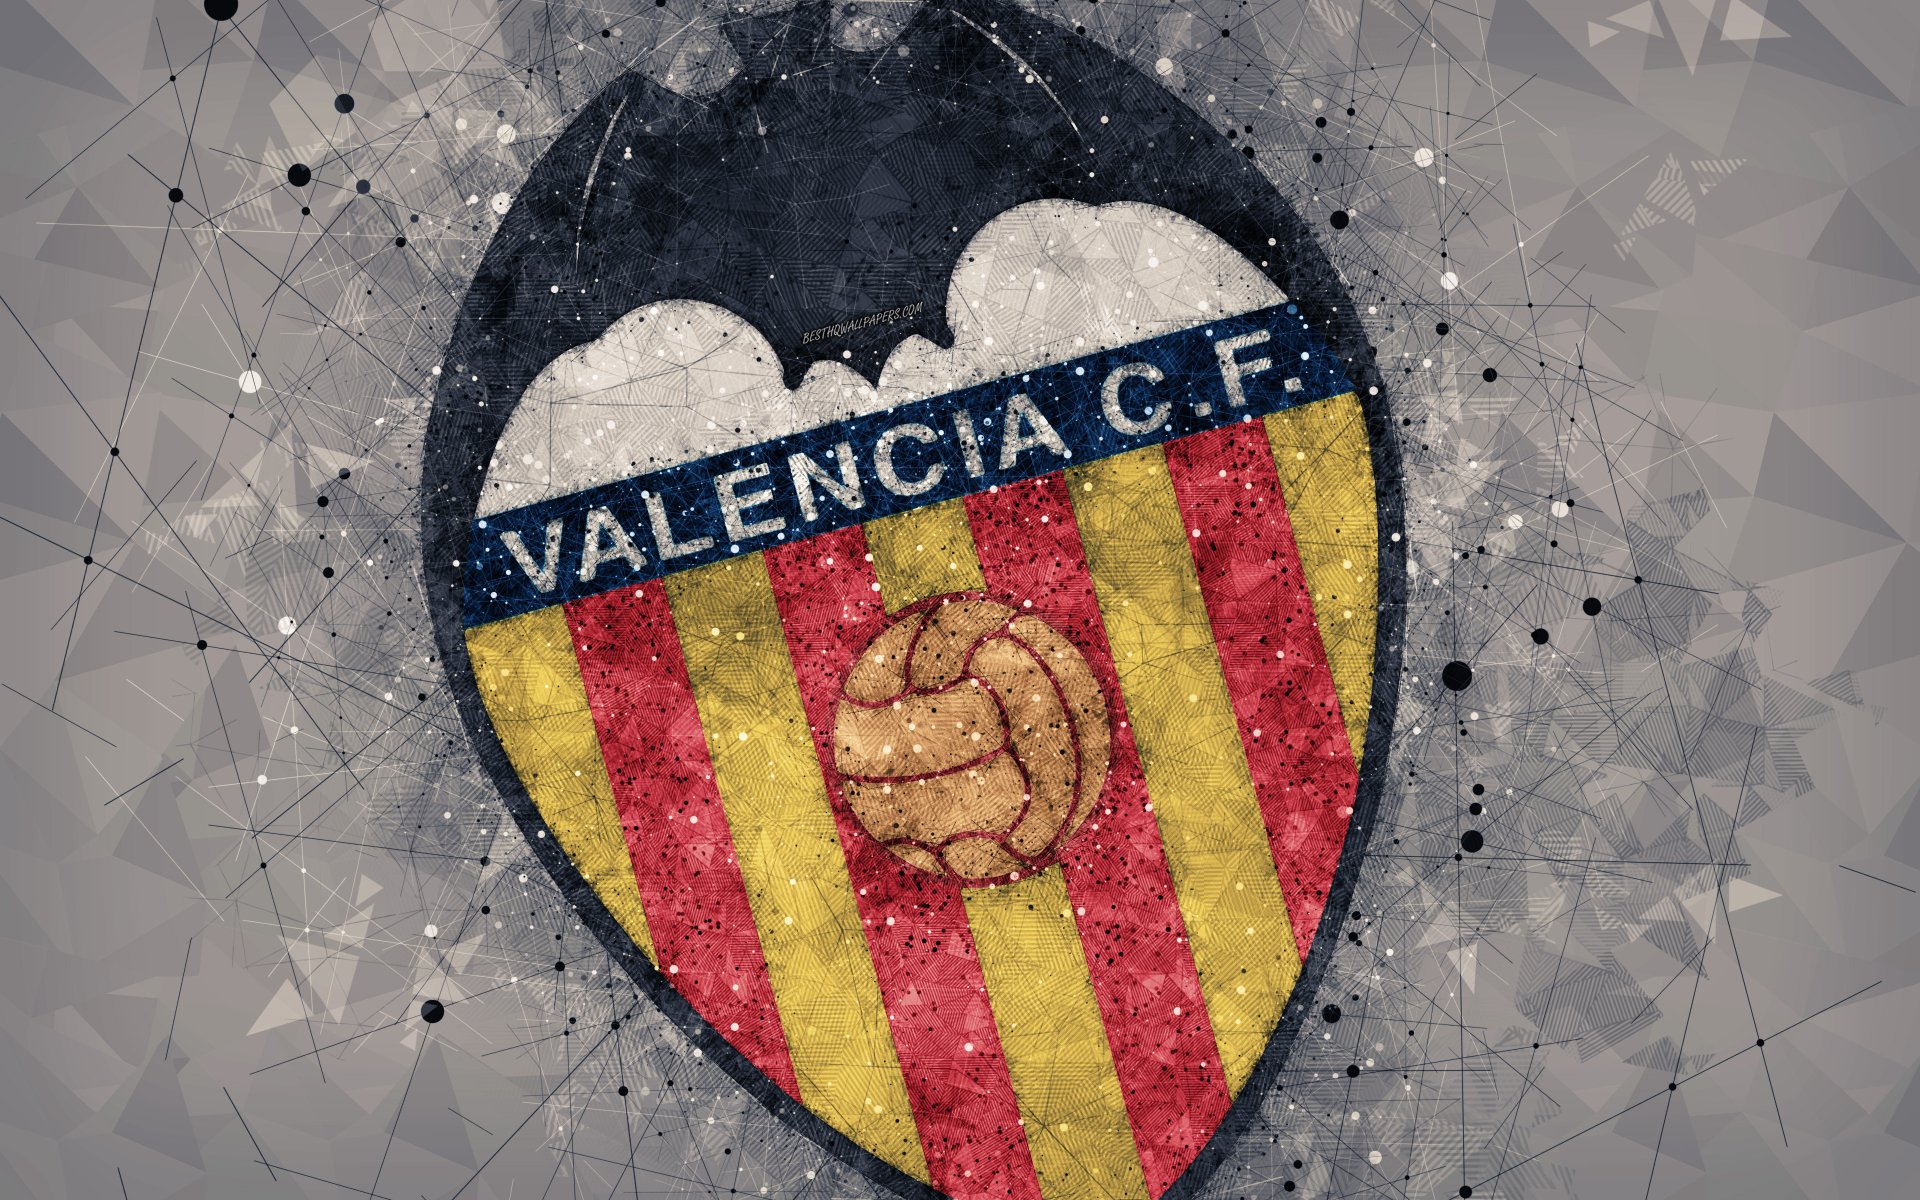 Valencia CF News